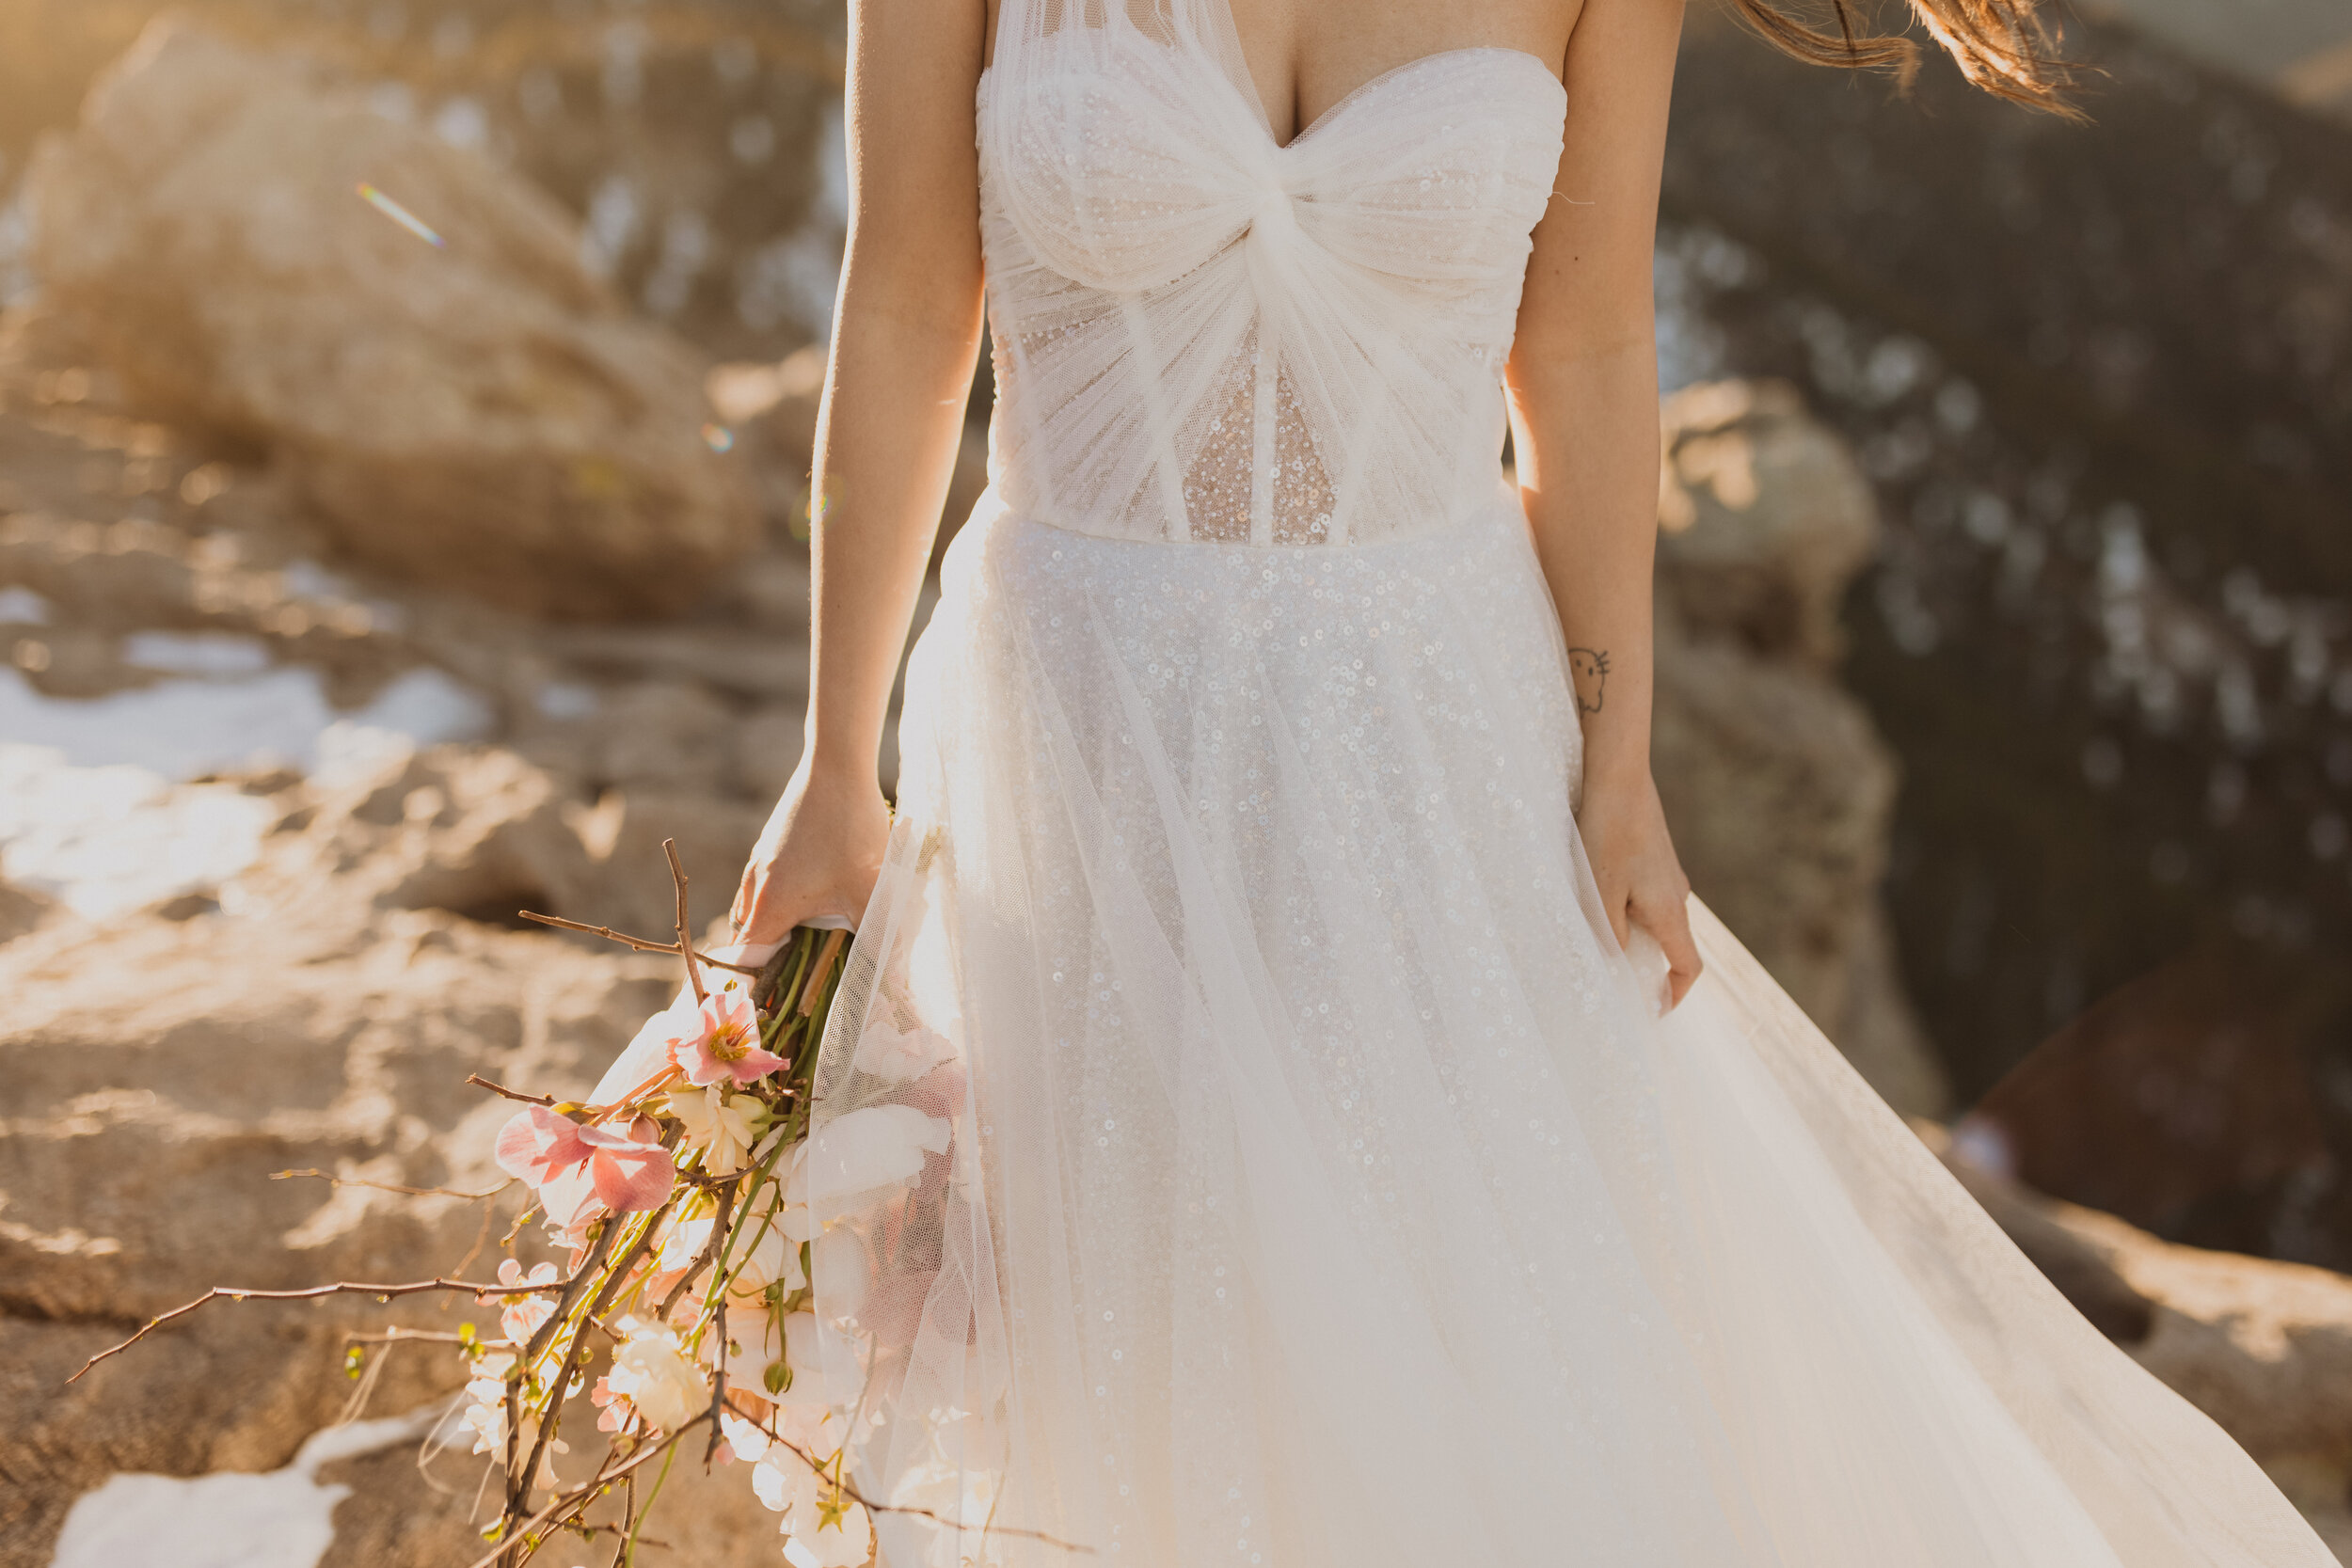  Lihi Hod Monaco wedding dress from anna be Colorado by Ariele Photography  